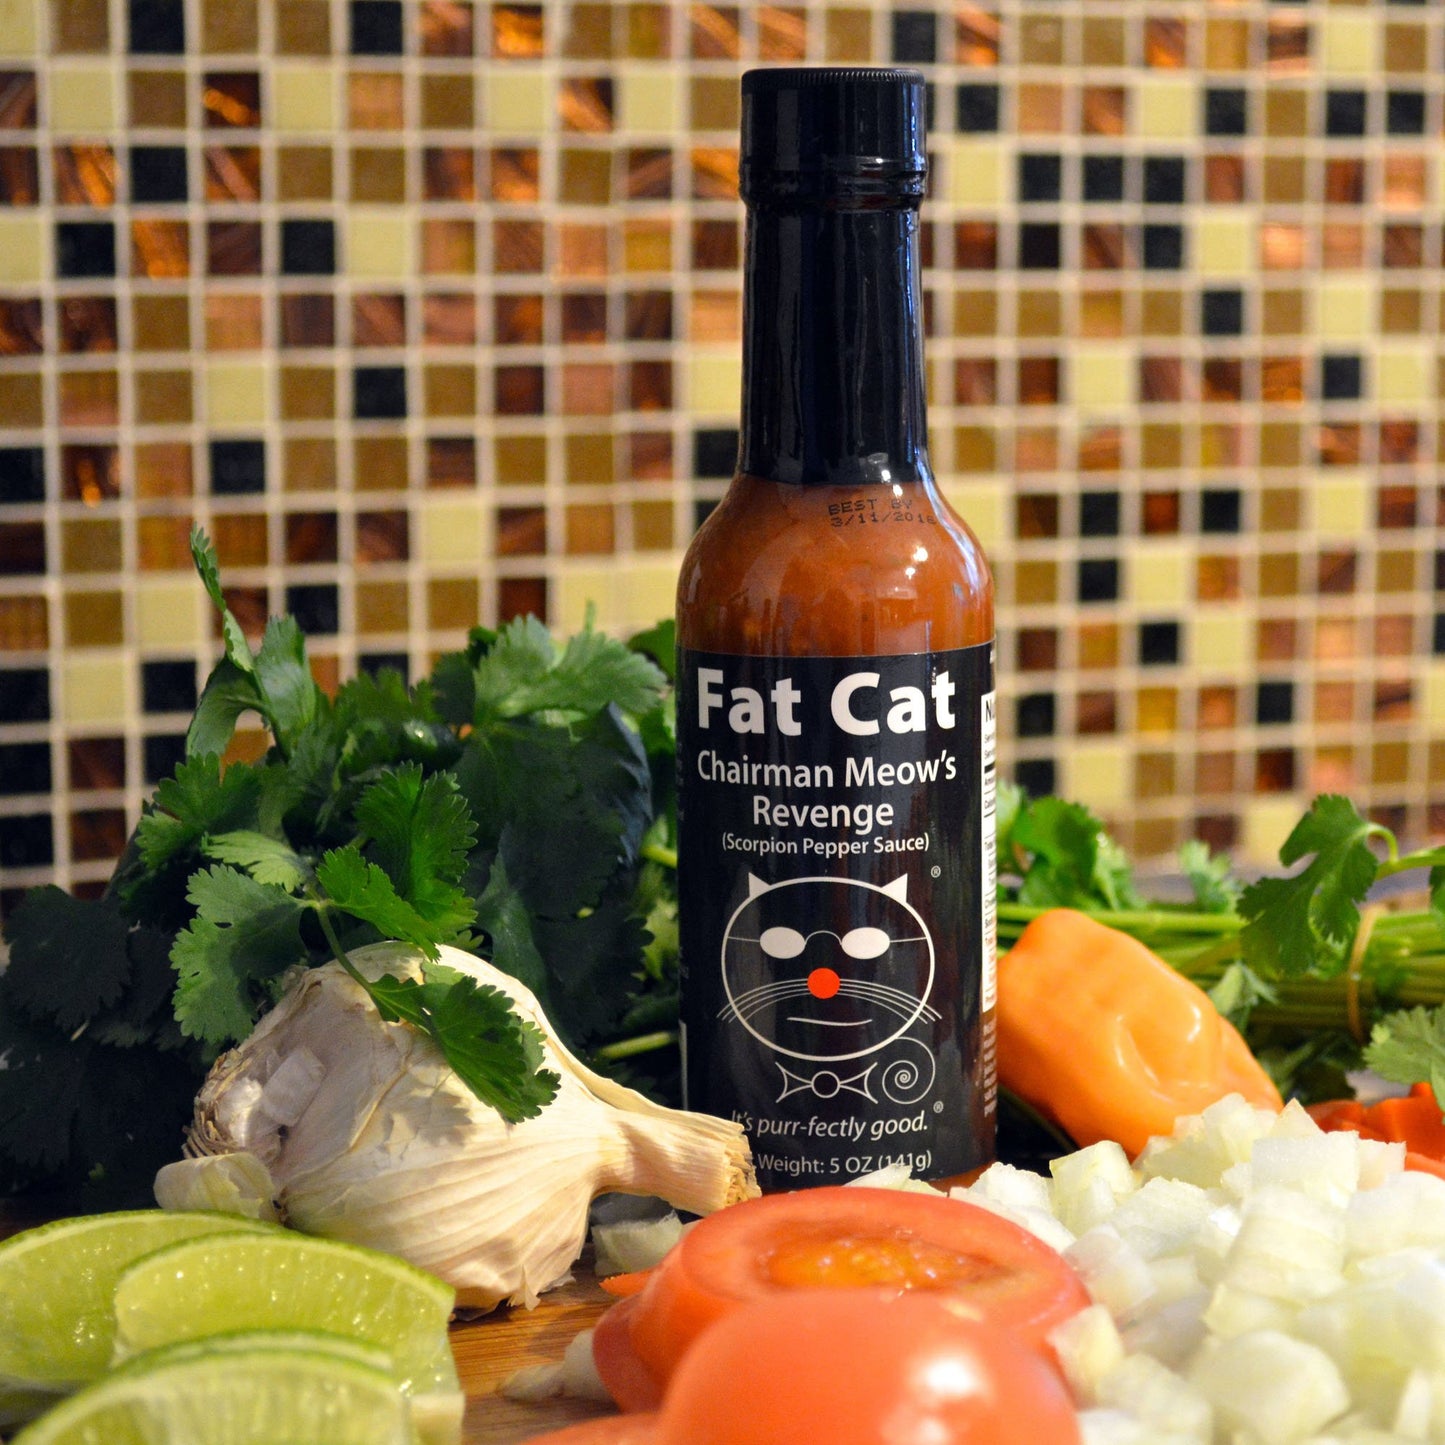 Fat Cat Chairman Meow's Revenge: Scorpion Pepper Sauce